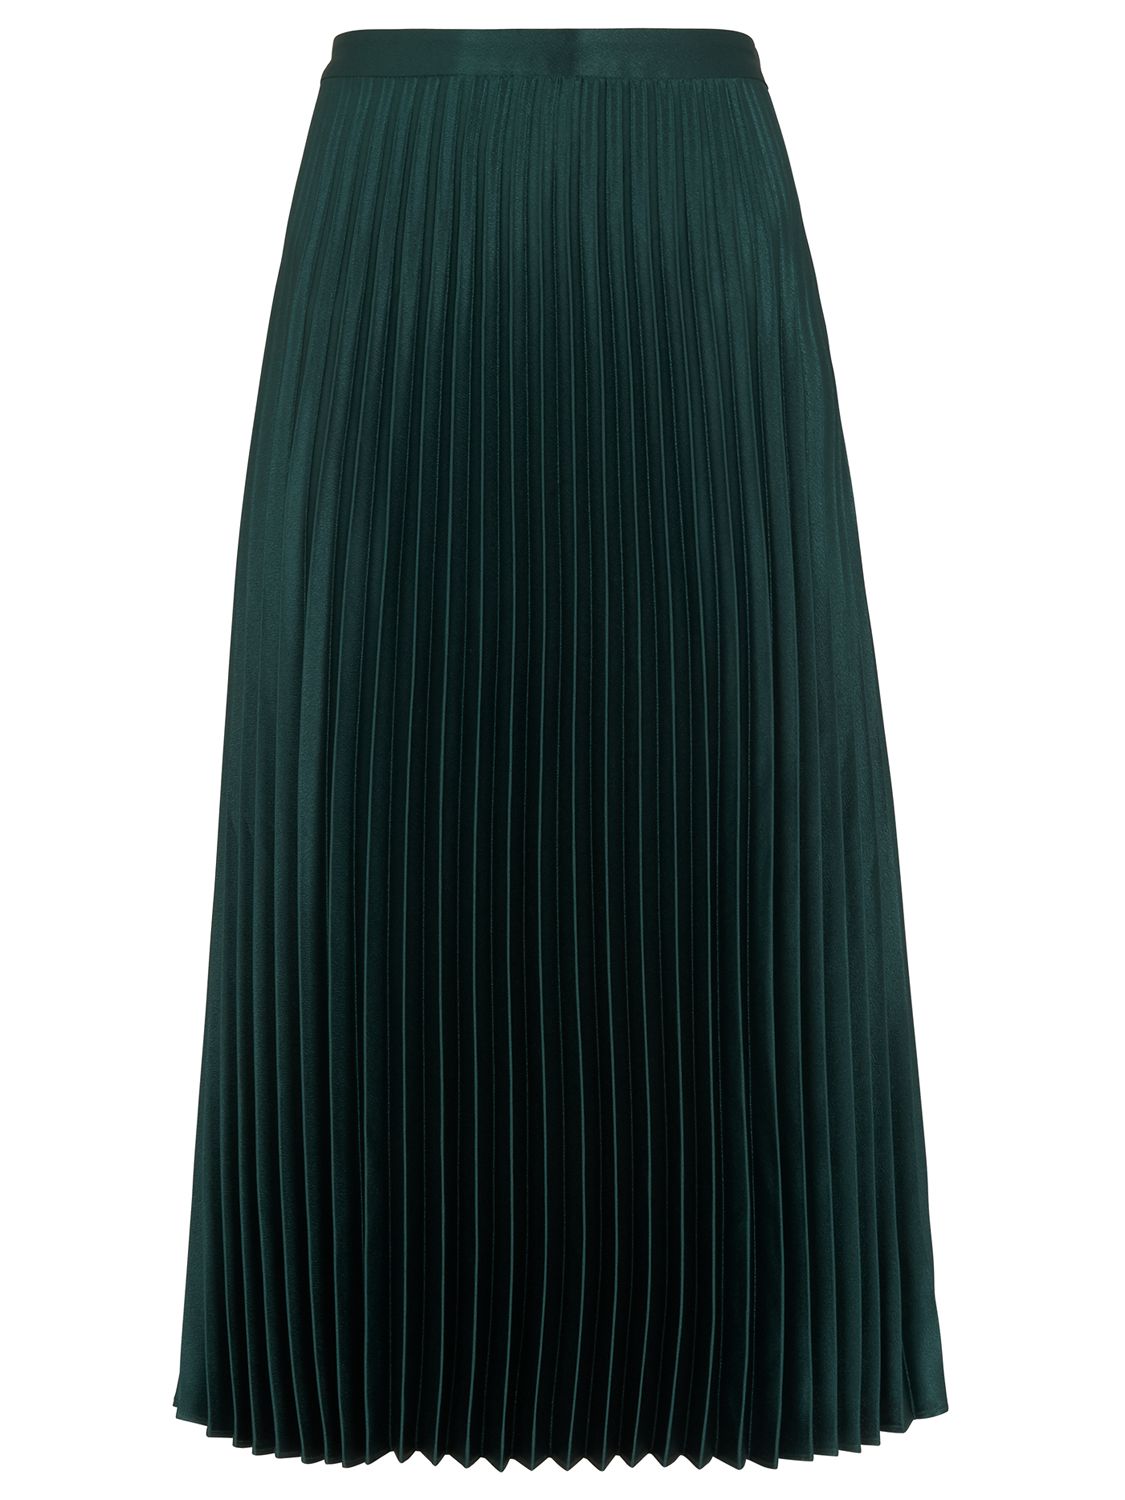 Whistles Satin Pleated Skirt, Dark Green